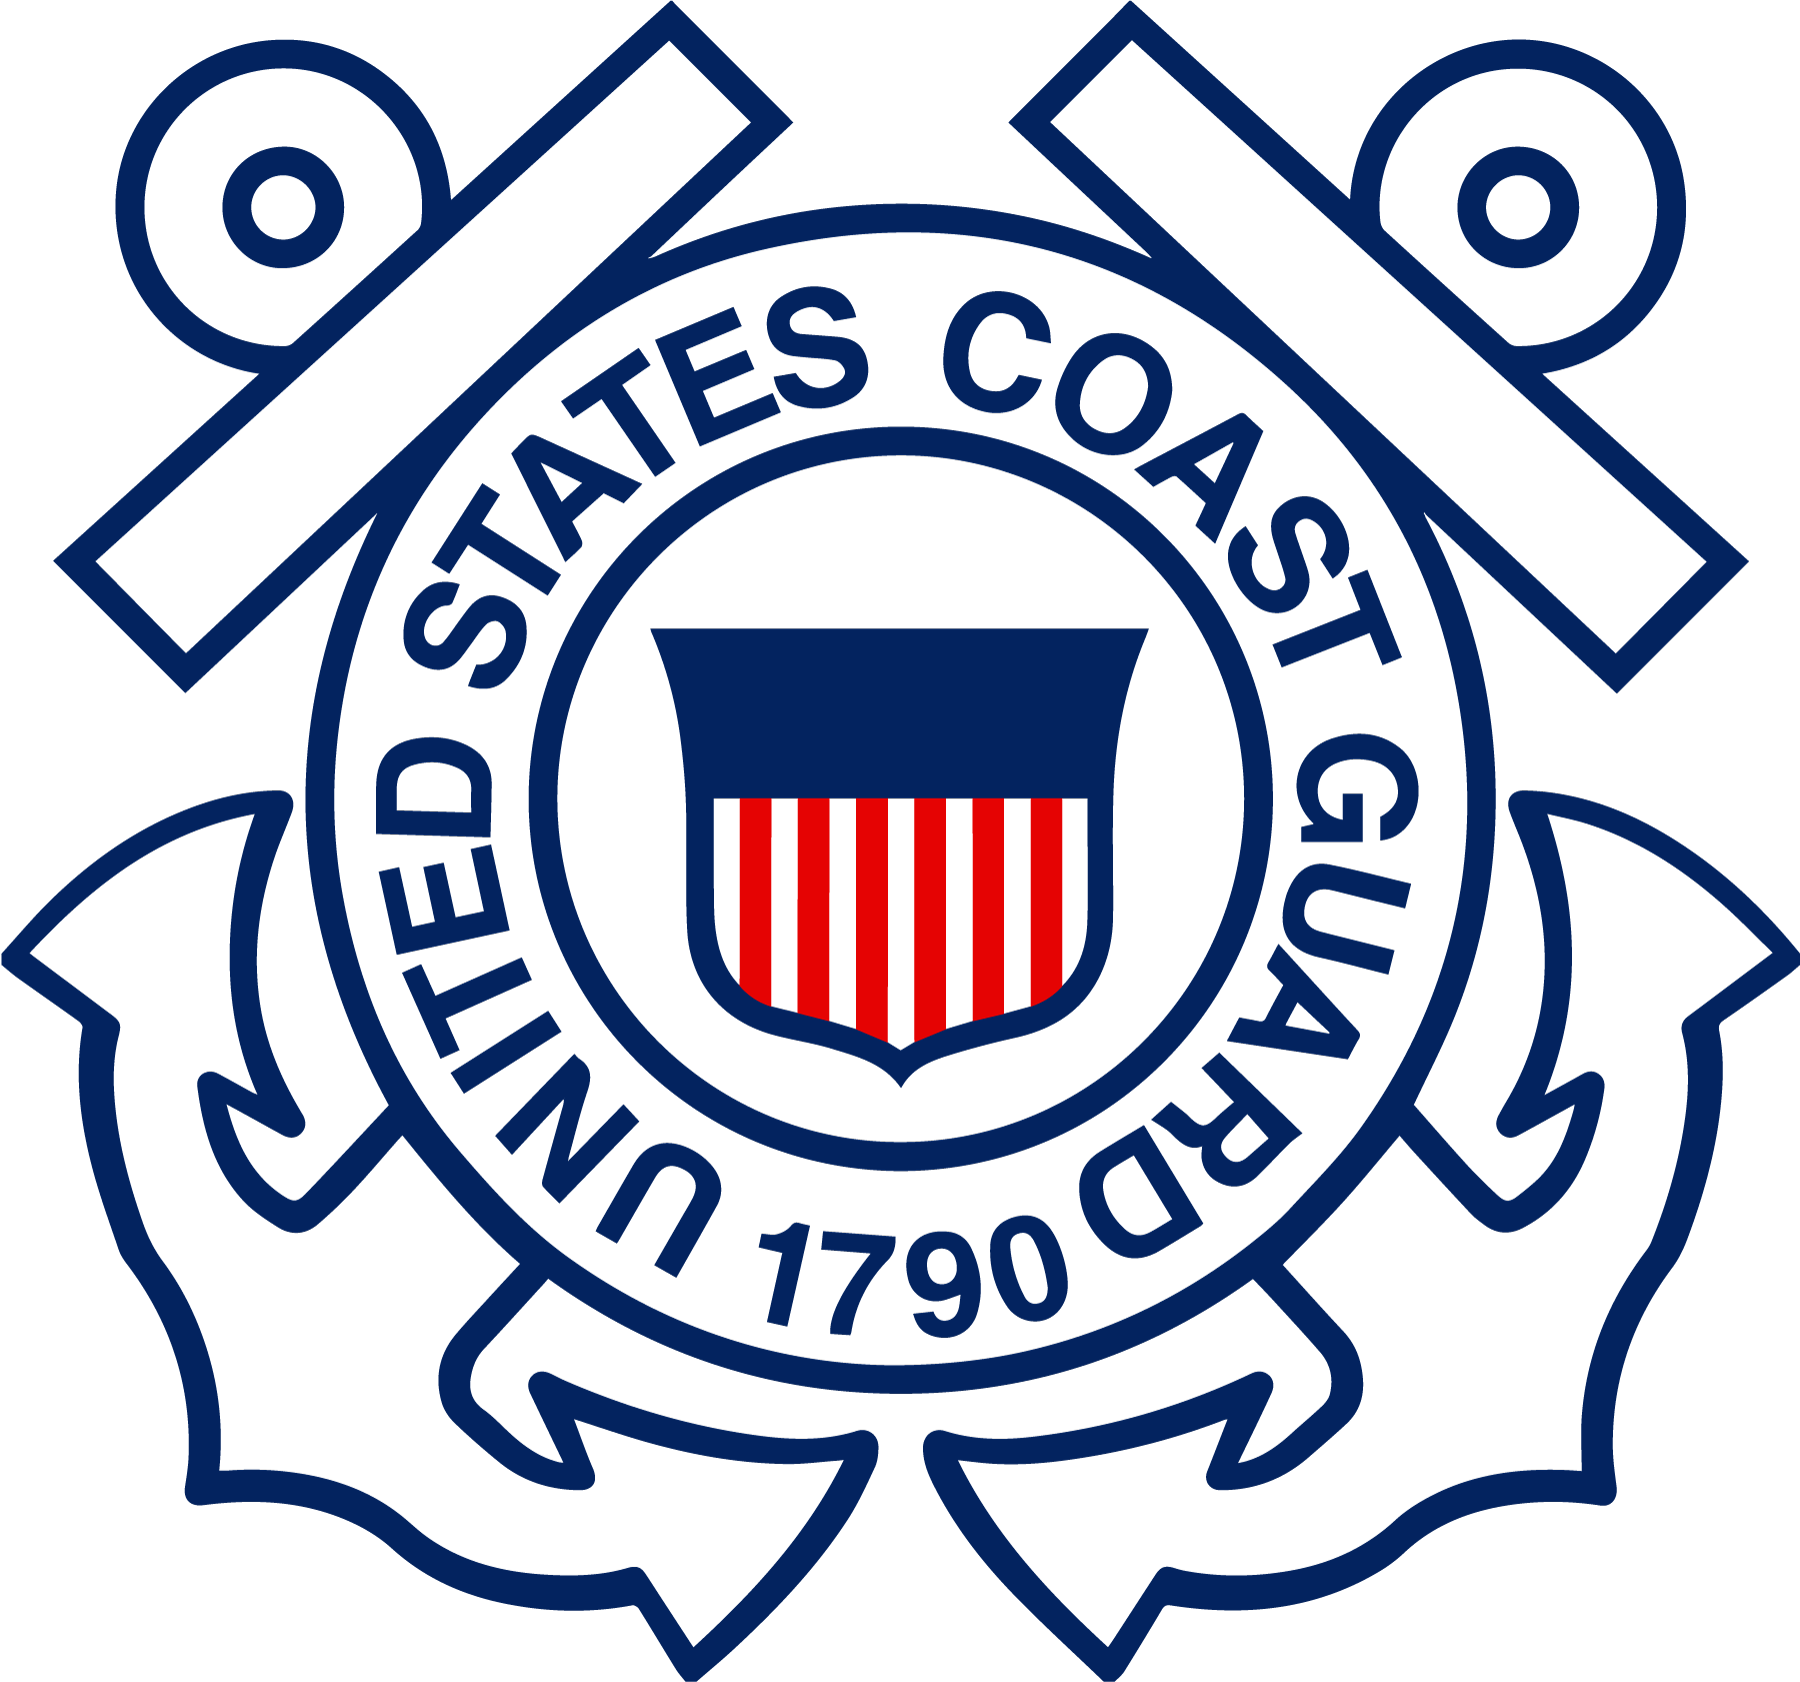 Military Logos Police Logos Fire Department Logos And Event Logos ...